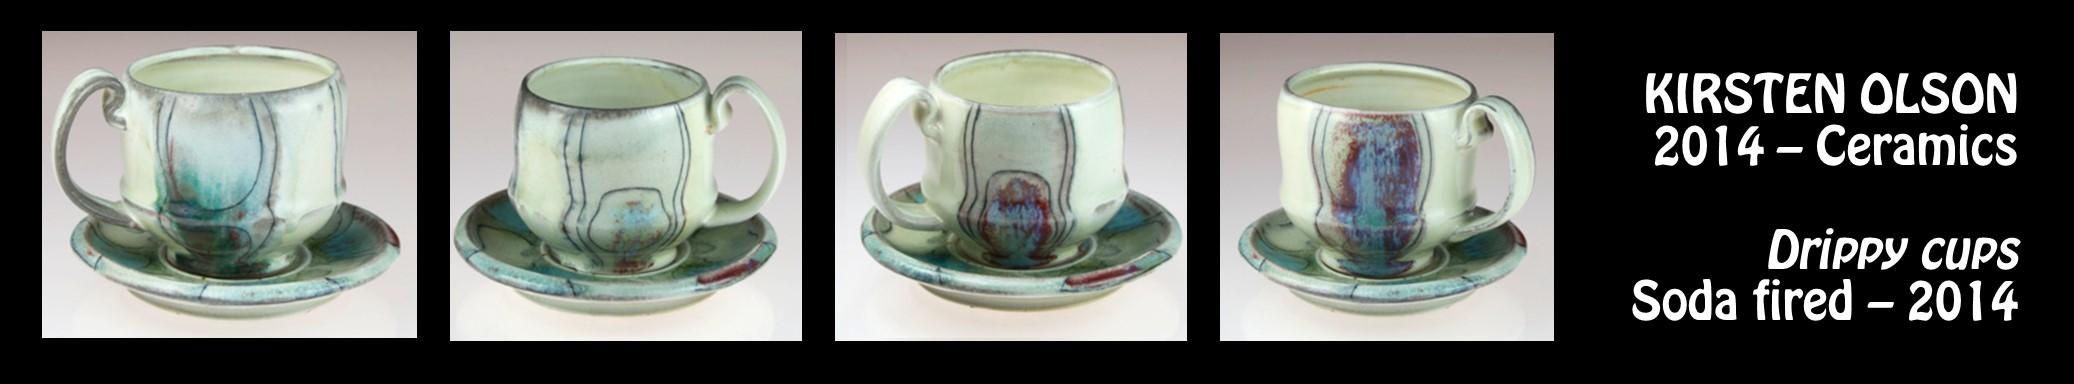 Kristen Olson - Ceramics - Drippy cups - Soda fired - 2014